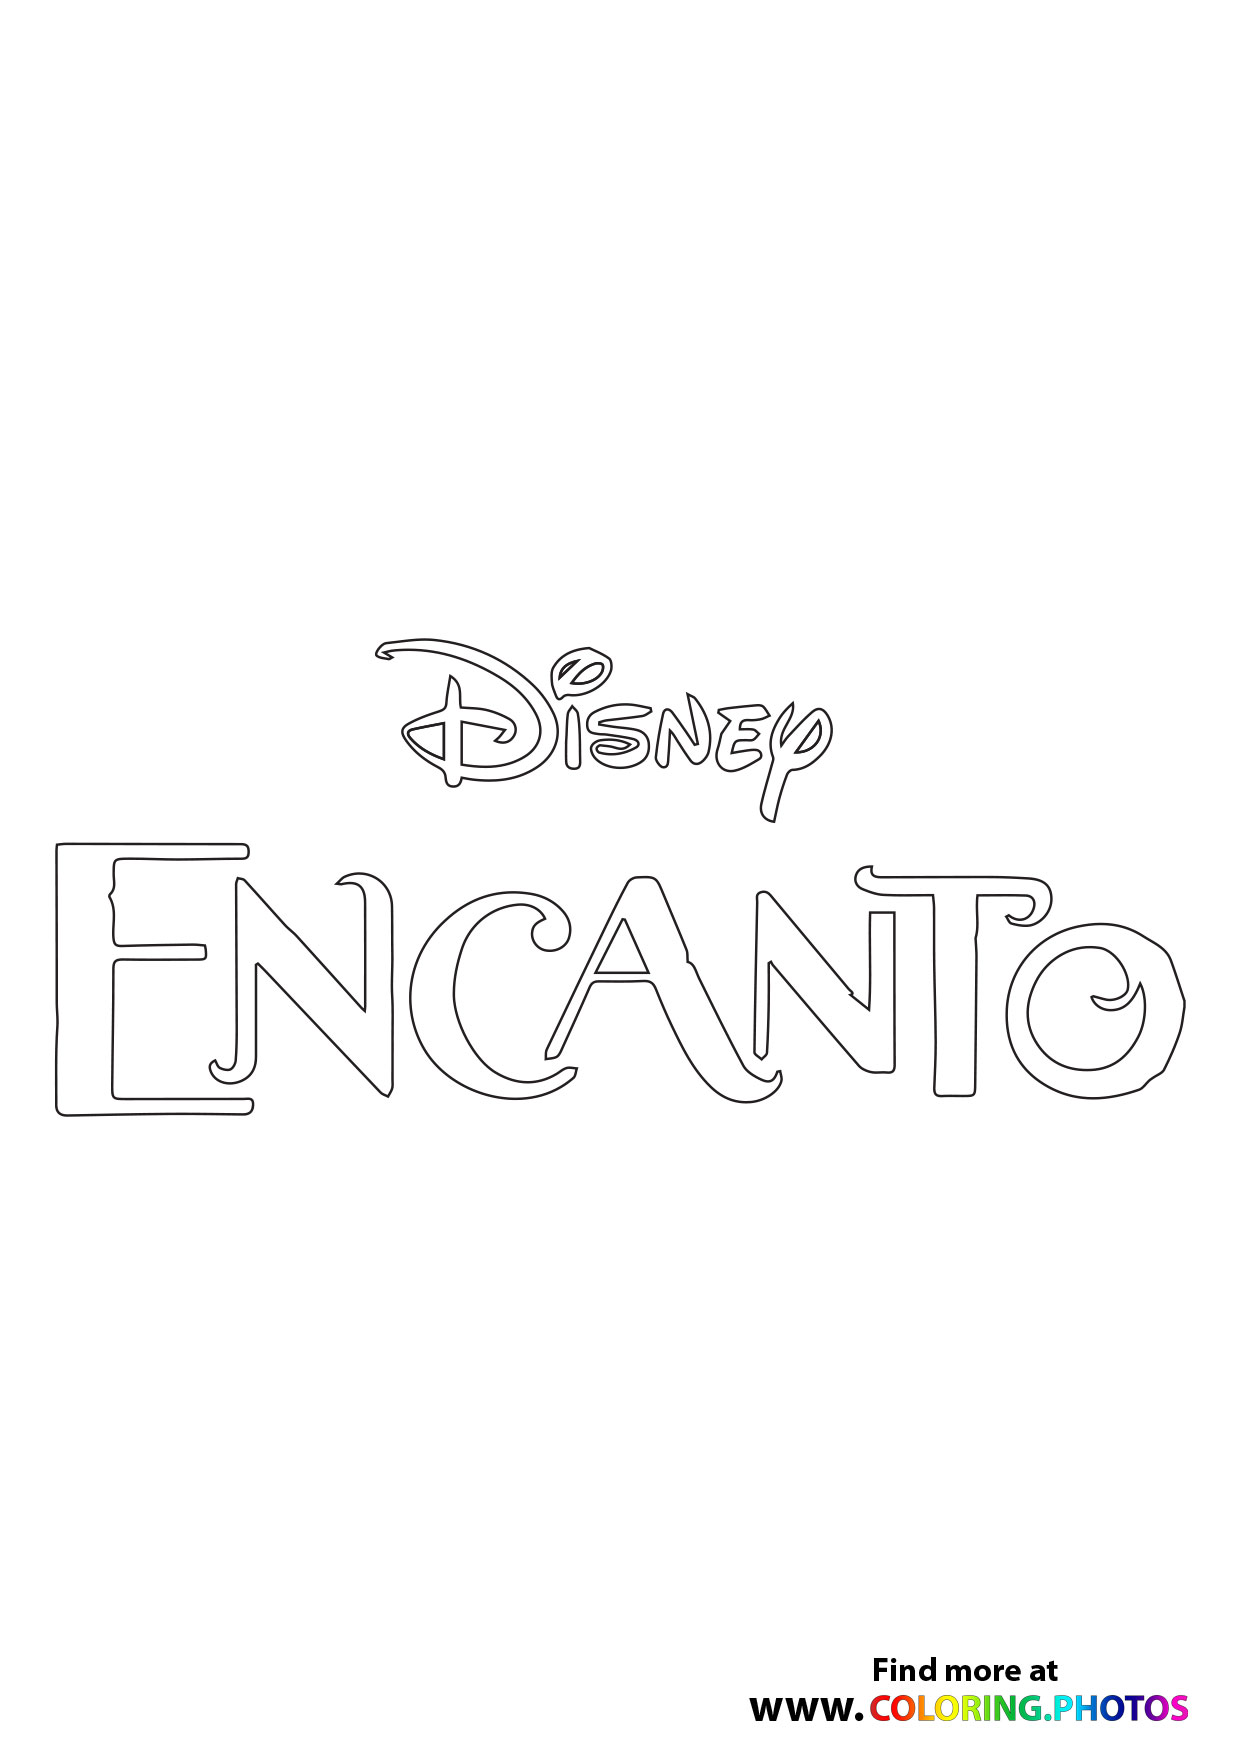 Disney Encanto logo Coloring Pages for kids